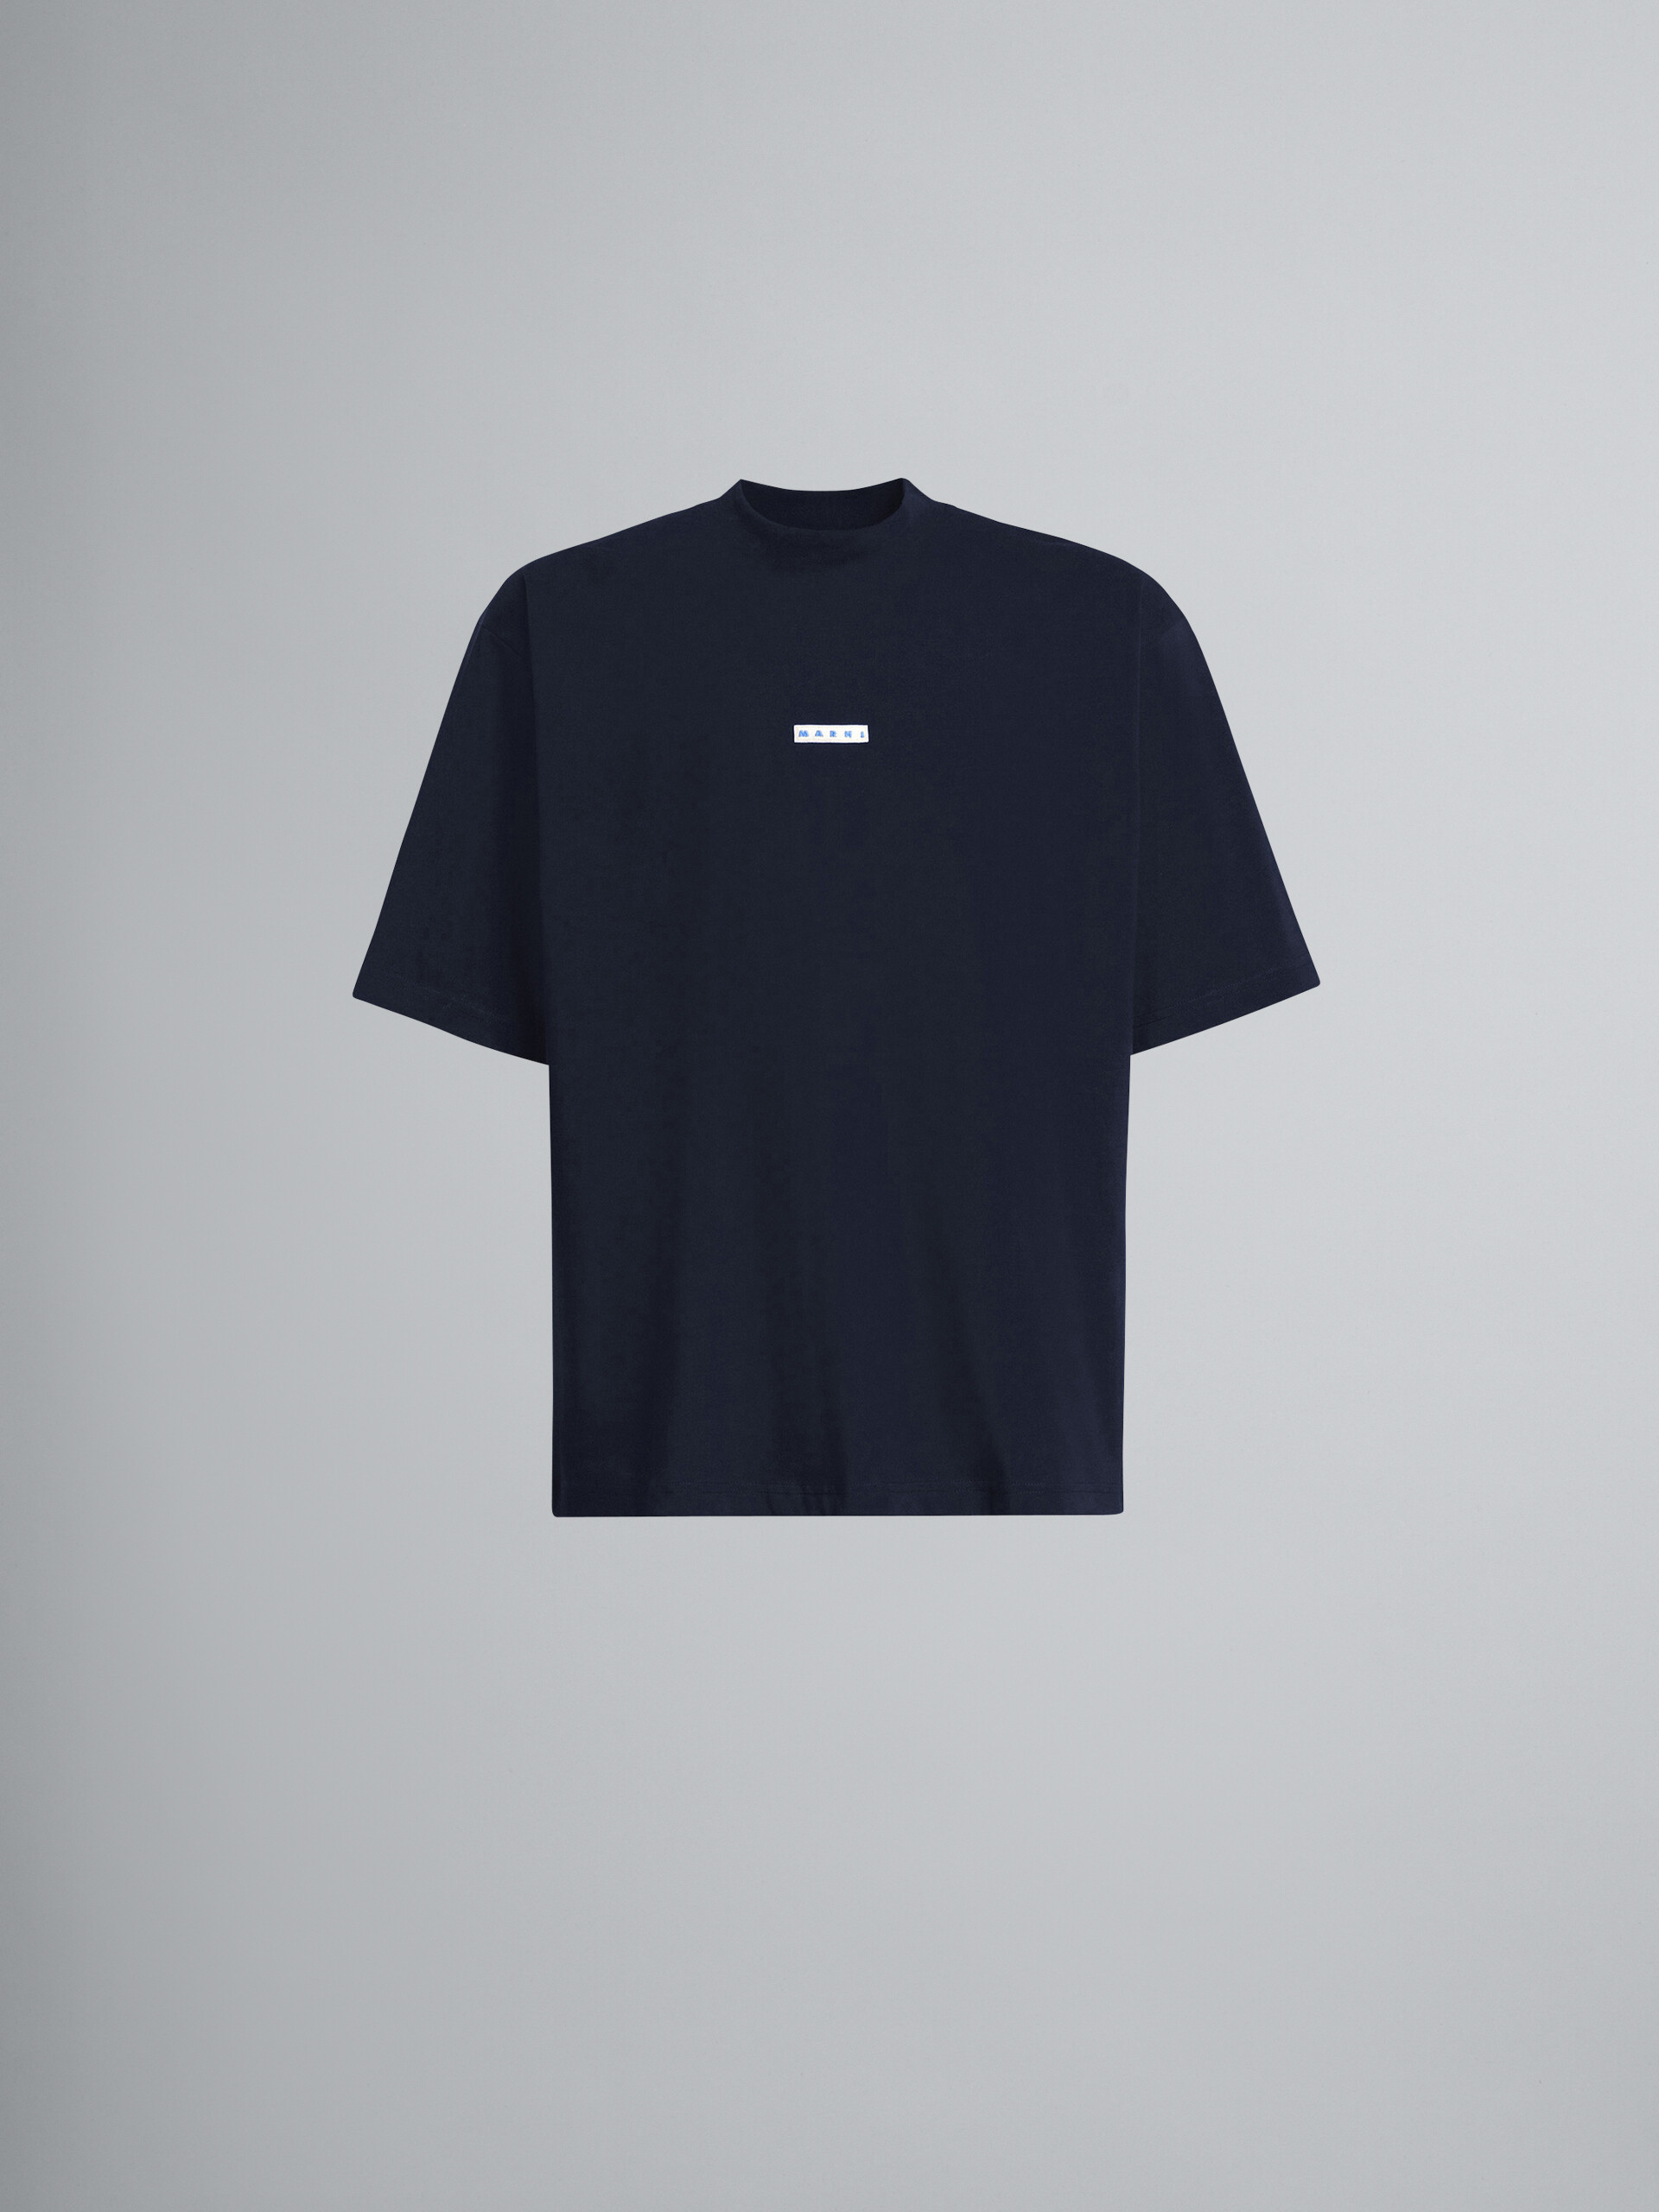 Black bio cotton jersey T-shirt - T-shirts - Image 1